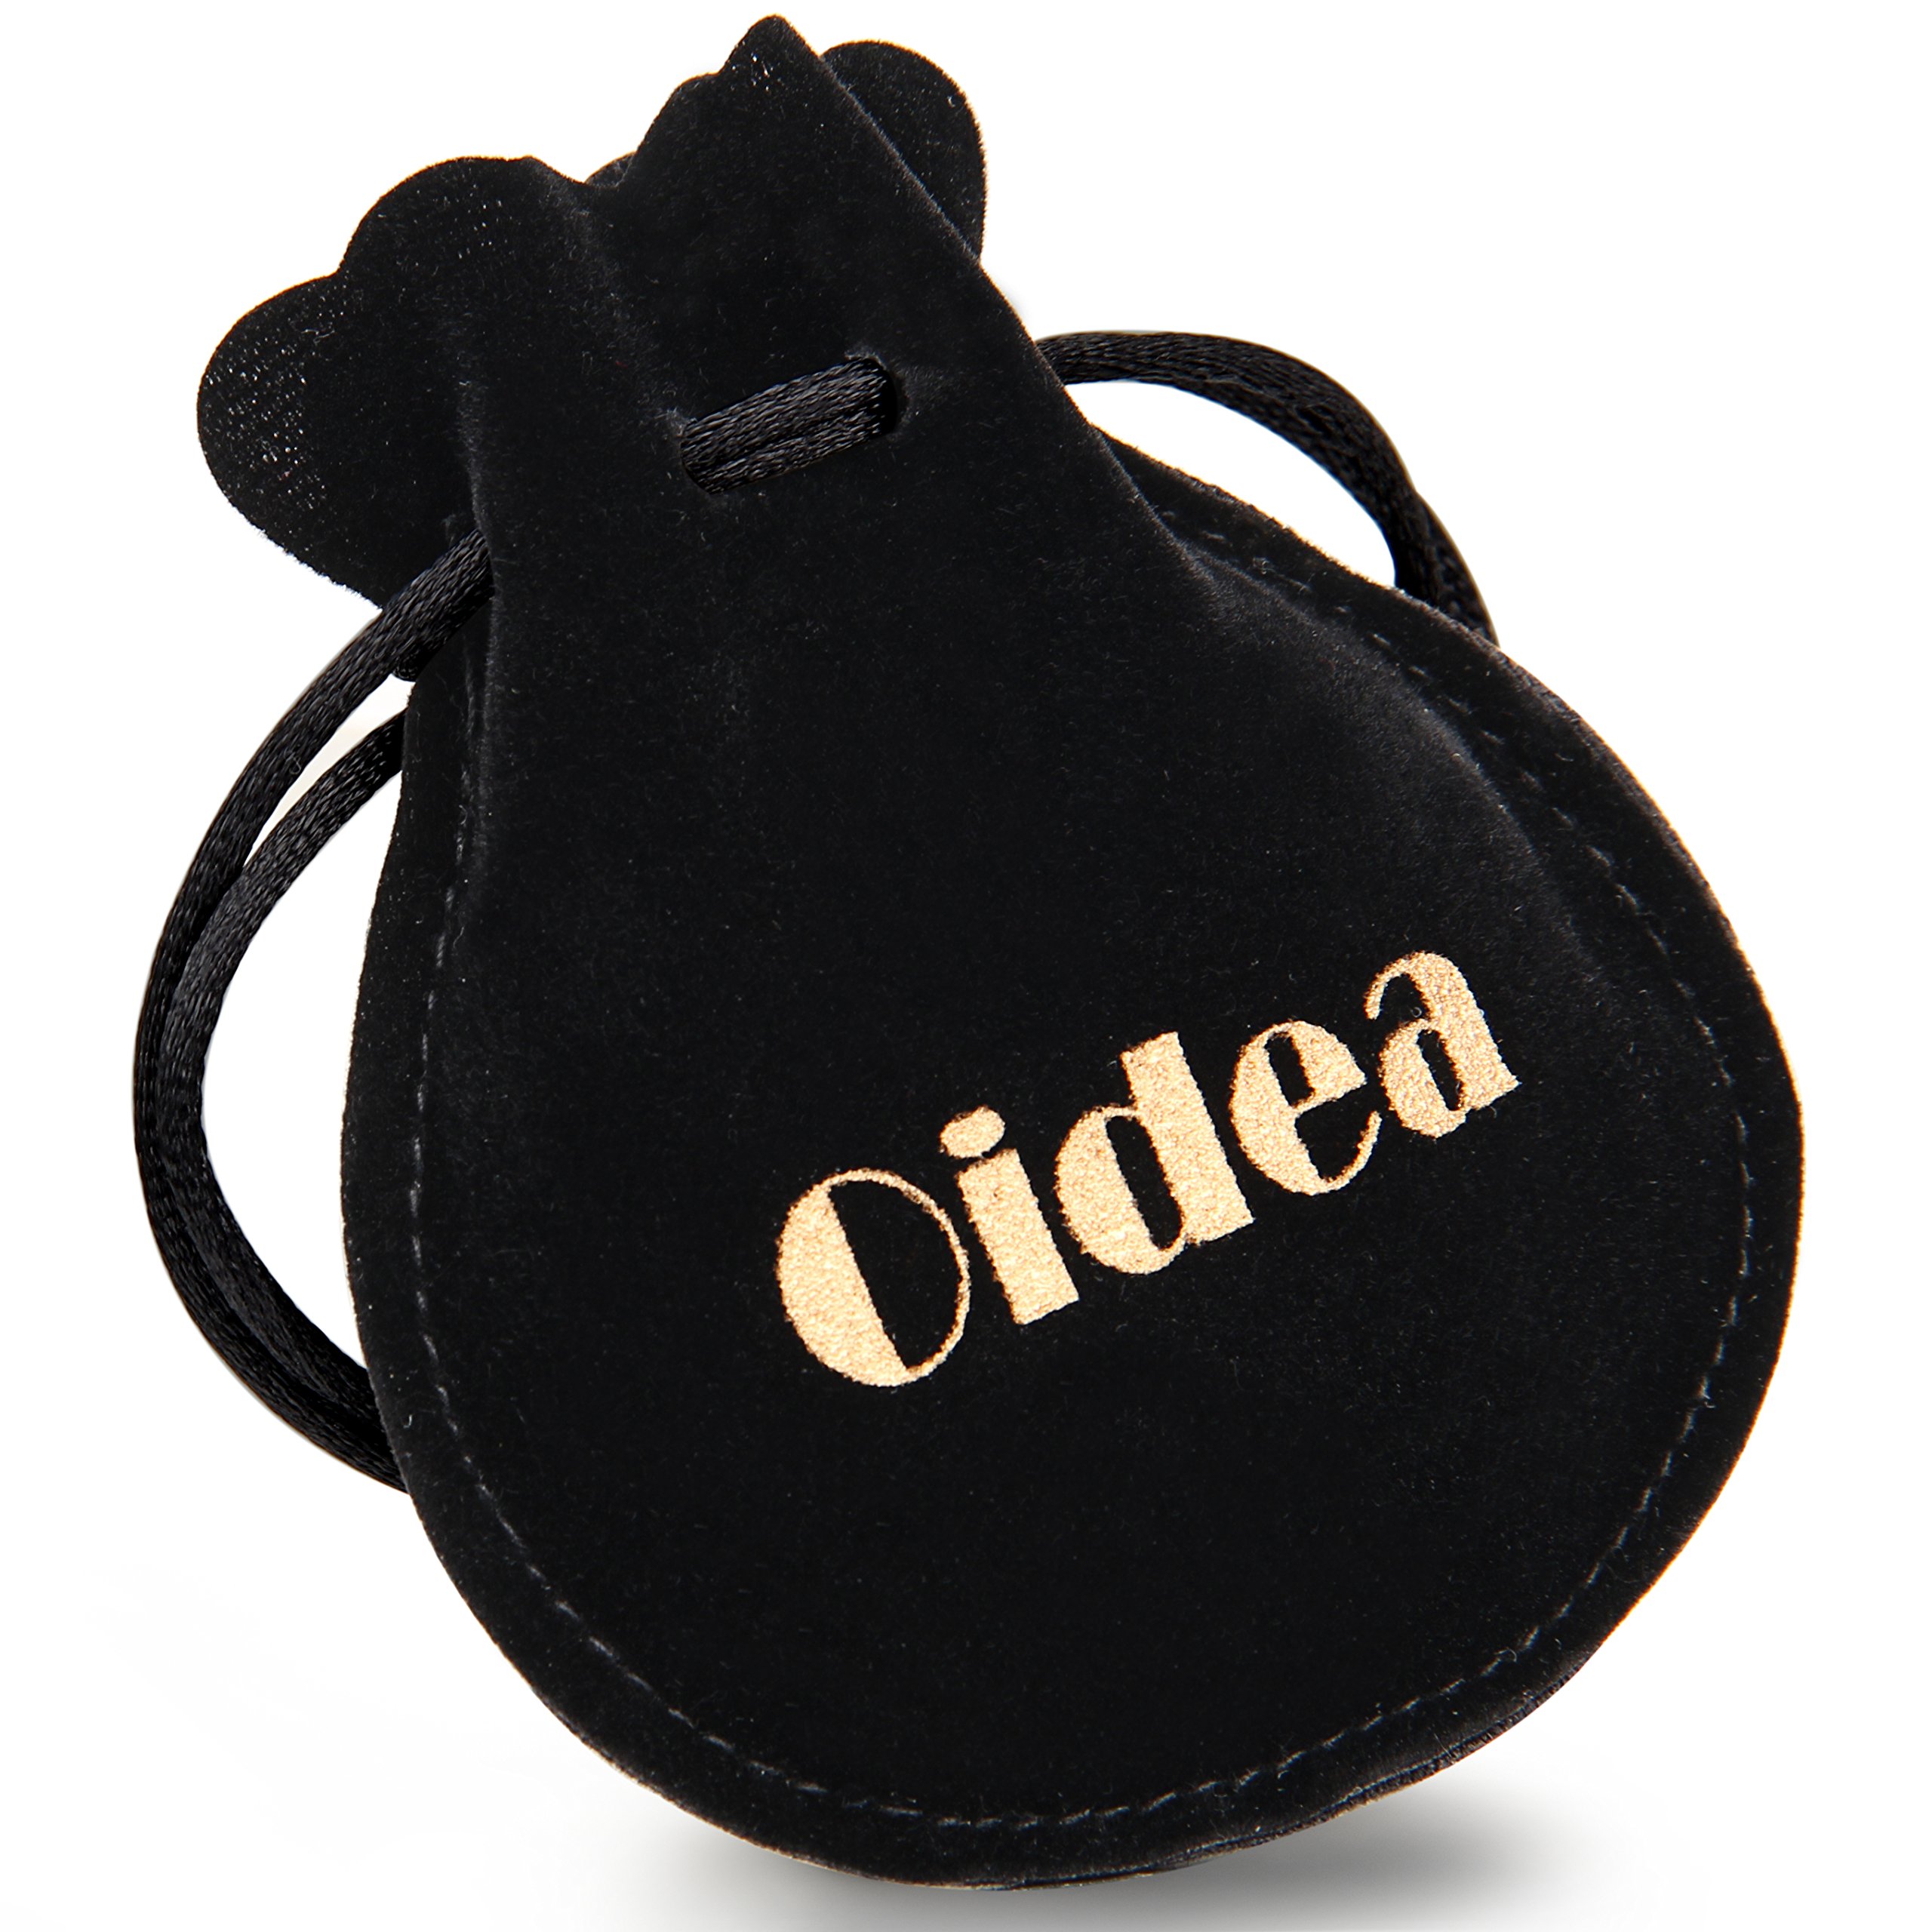 OIDEA Assorted 3pcs Mens Punk Multistrand Leather Braided Bangle Cuff Bracelet for Biker, Size Adjustable,Brown